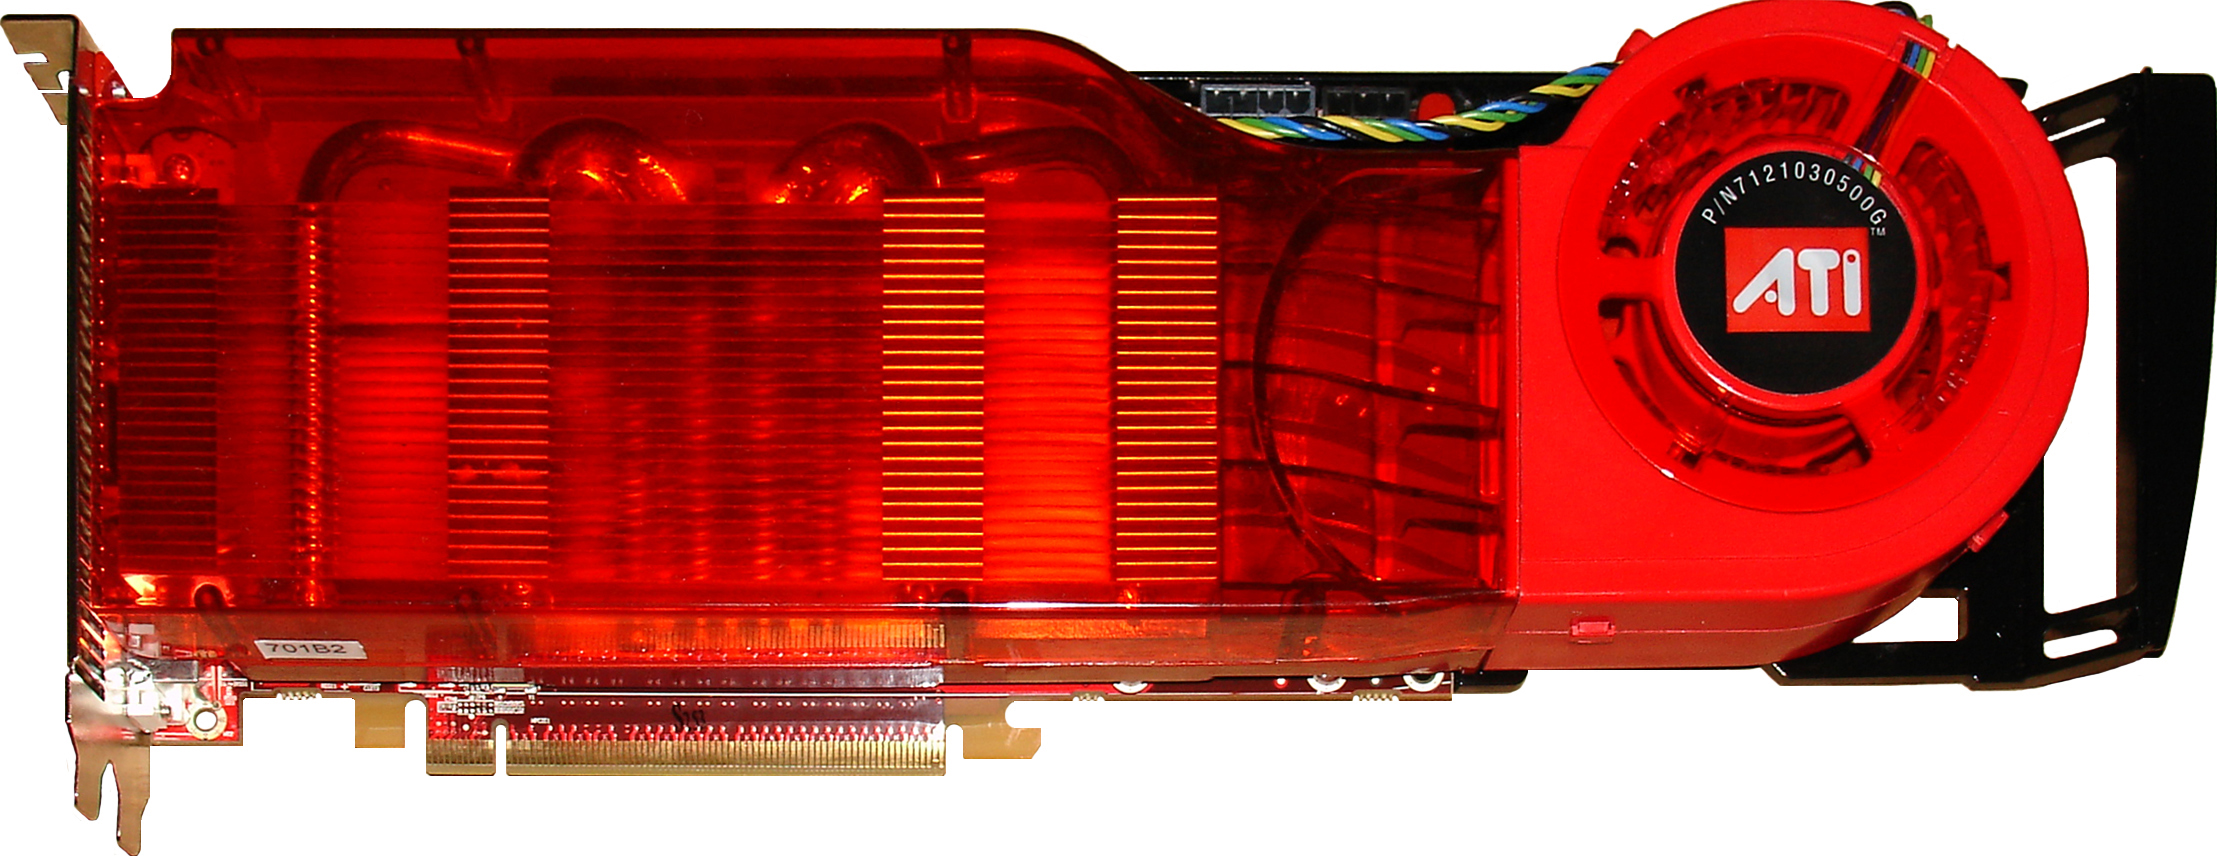 ATi Radeon HD 2900 XTX 1024MB GDDR4 512Bit Rev_A1 0704 Prototype top1.jpg